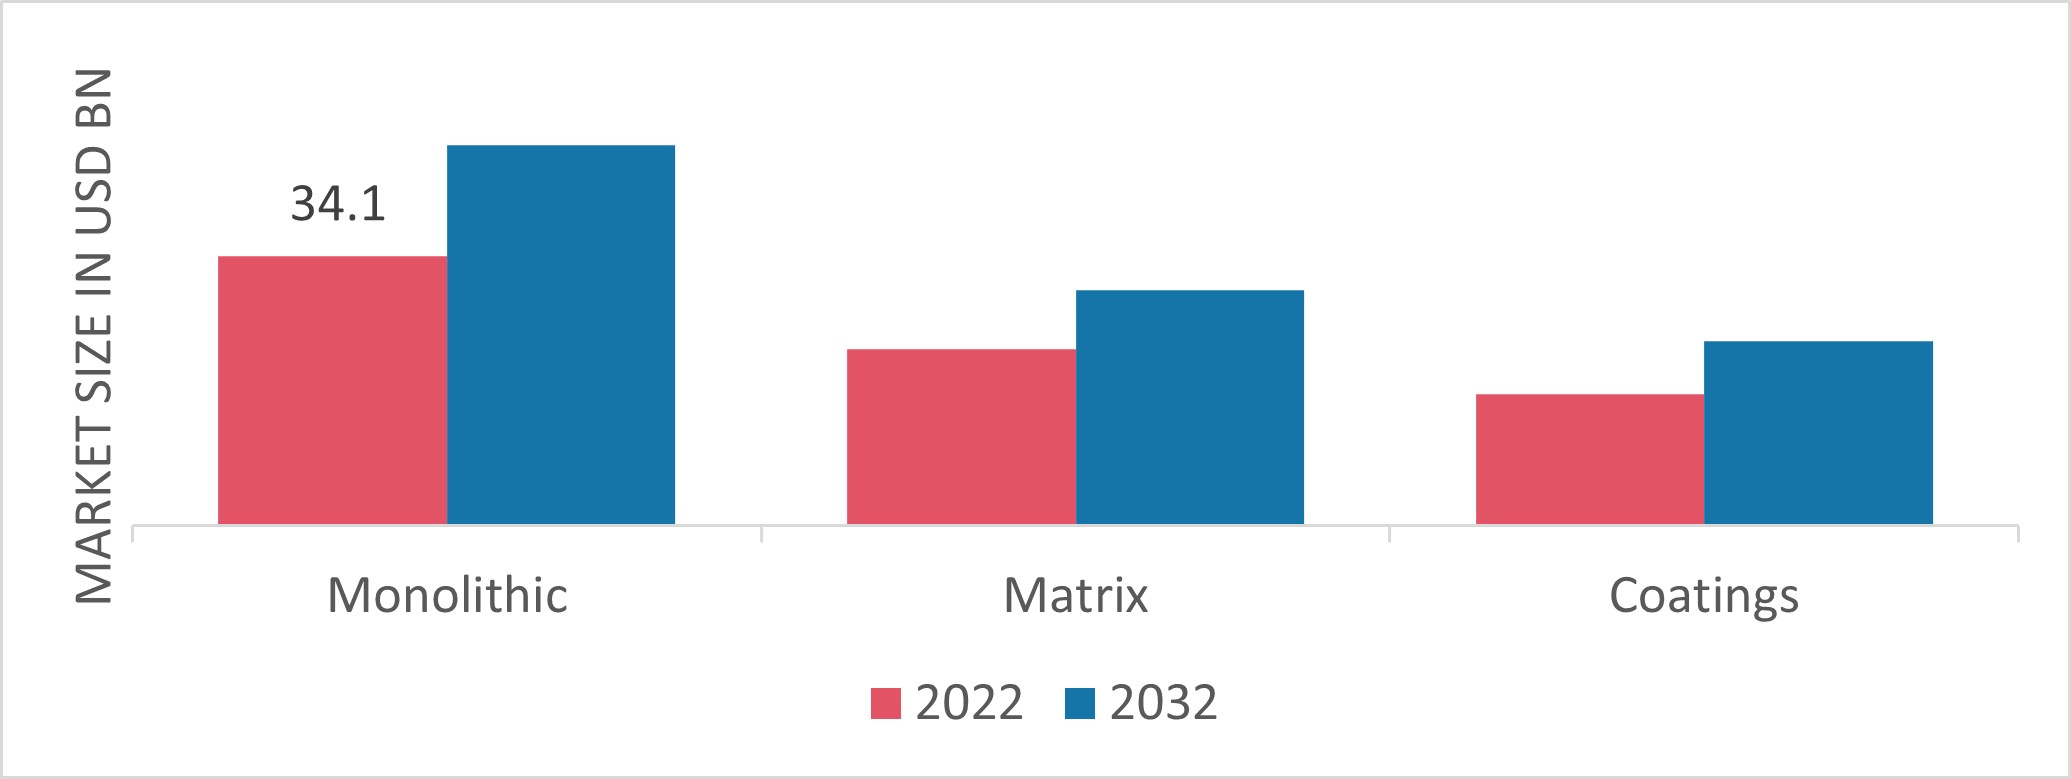 Advanced Ceramics Market, by Product, 2022 & 2032